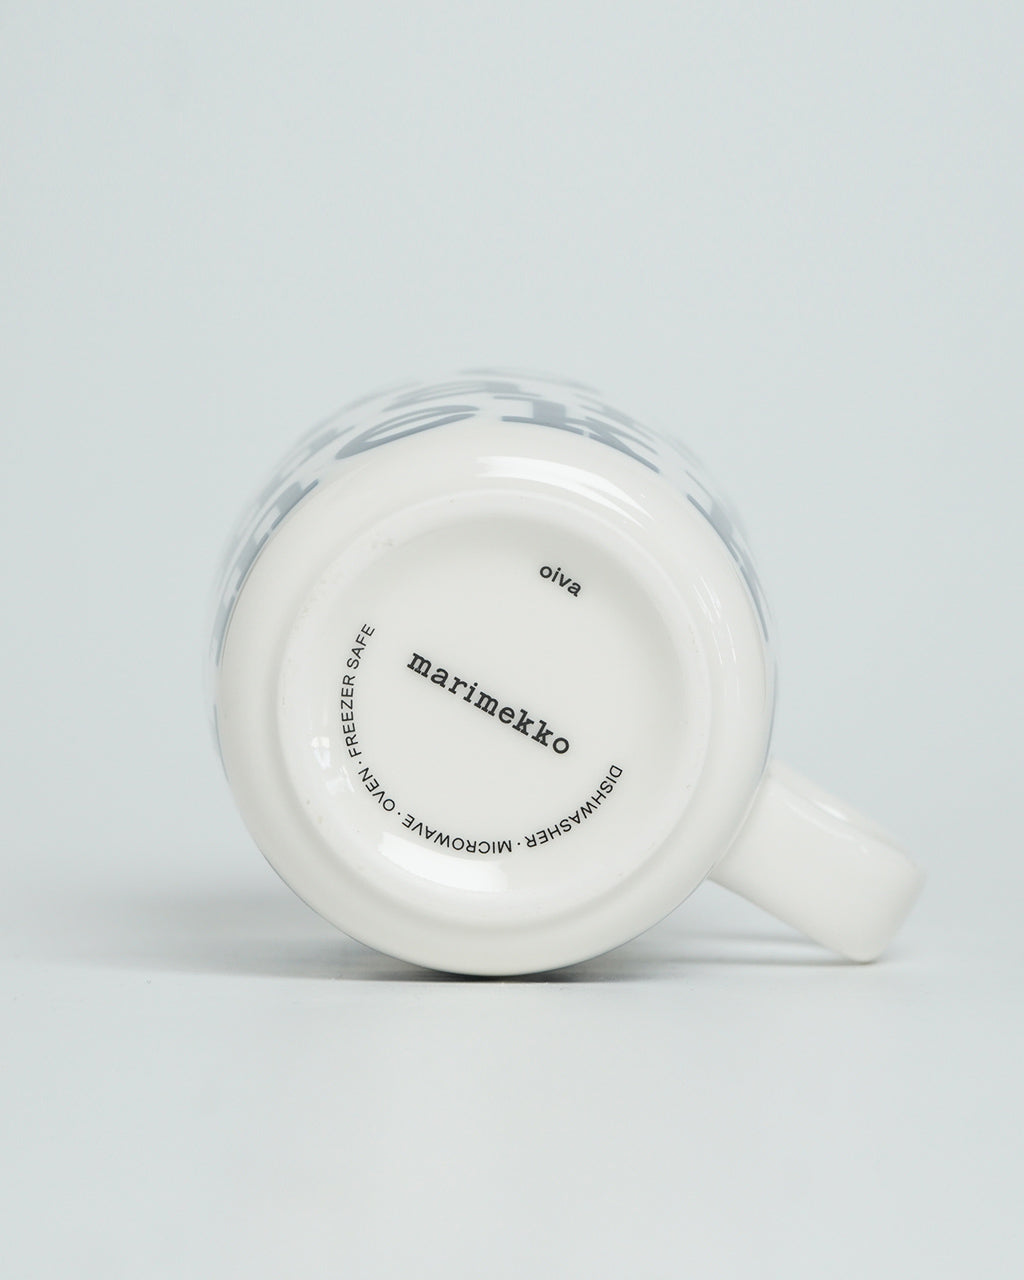 marimekko マリメッコ 【日本限定】マリメッコロゴ マグ Marimekko Logo mug 2.5dl マグカップ コーヒーカップ 250ml 52249473106